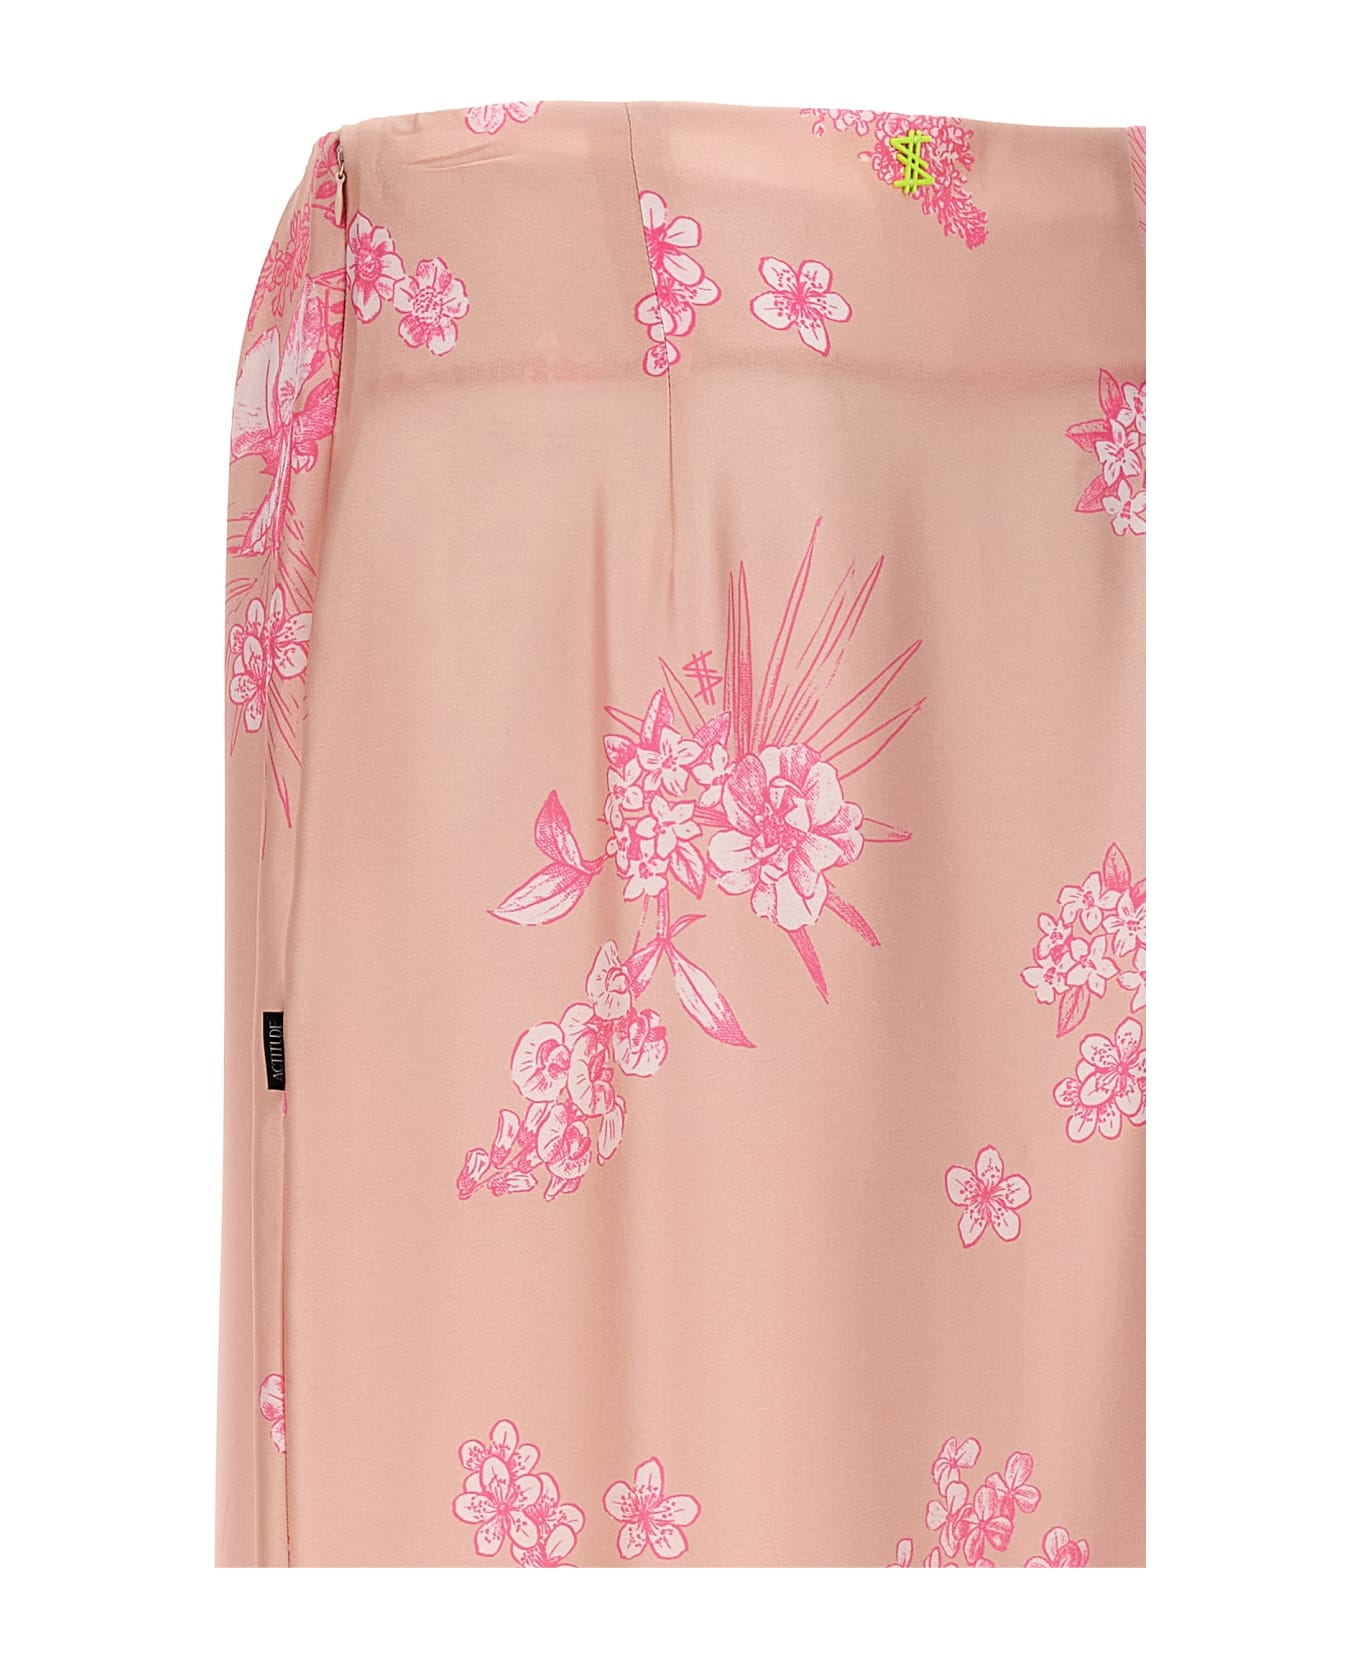 TwinSet Floral Print Skirt - Pink